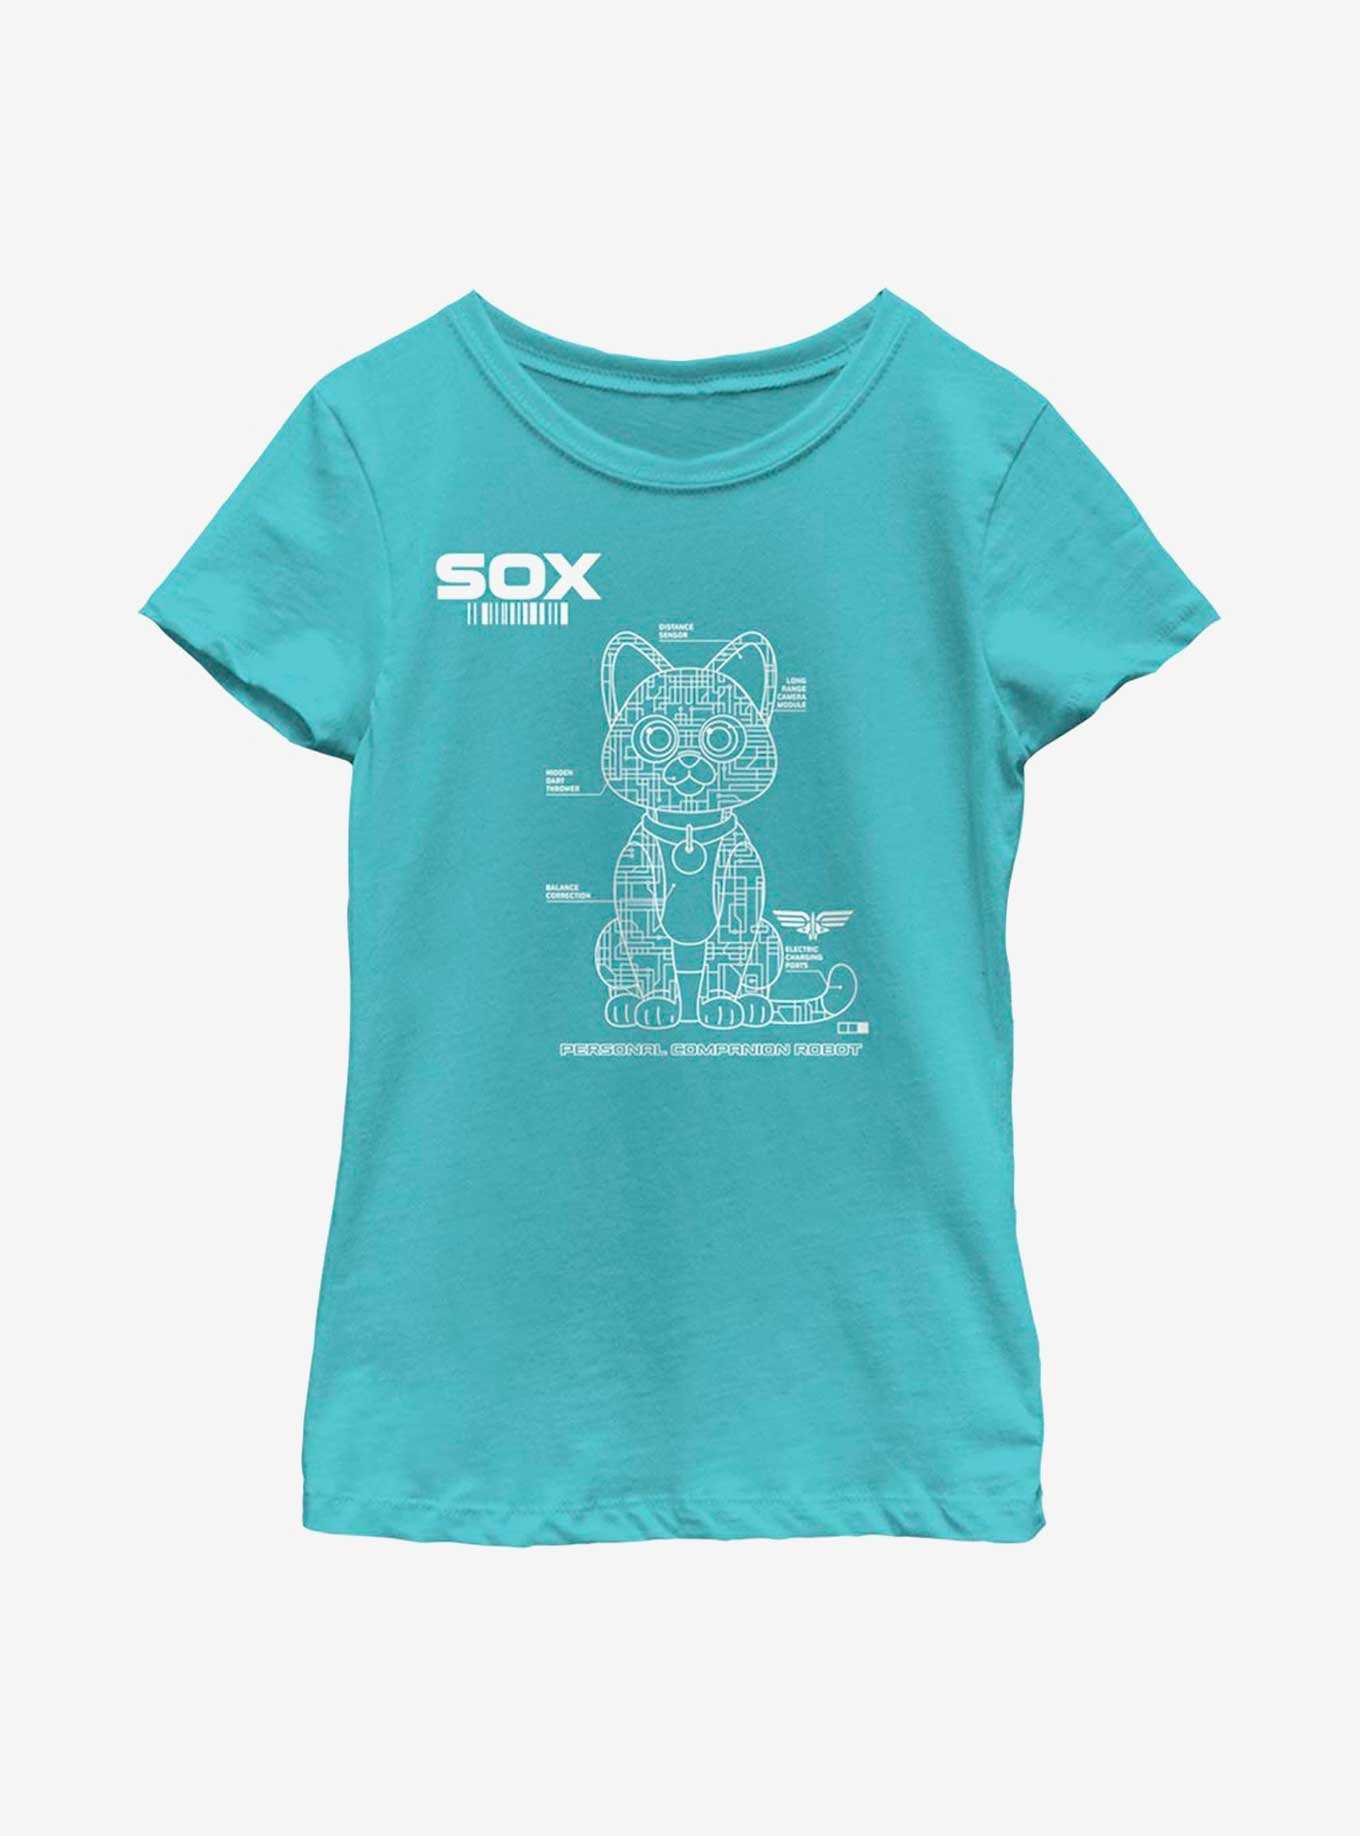 Disney Pixar Lightyear Sox Tech Youth Girls T-Shirt, , hi-res